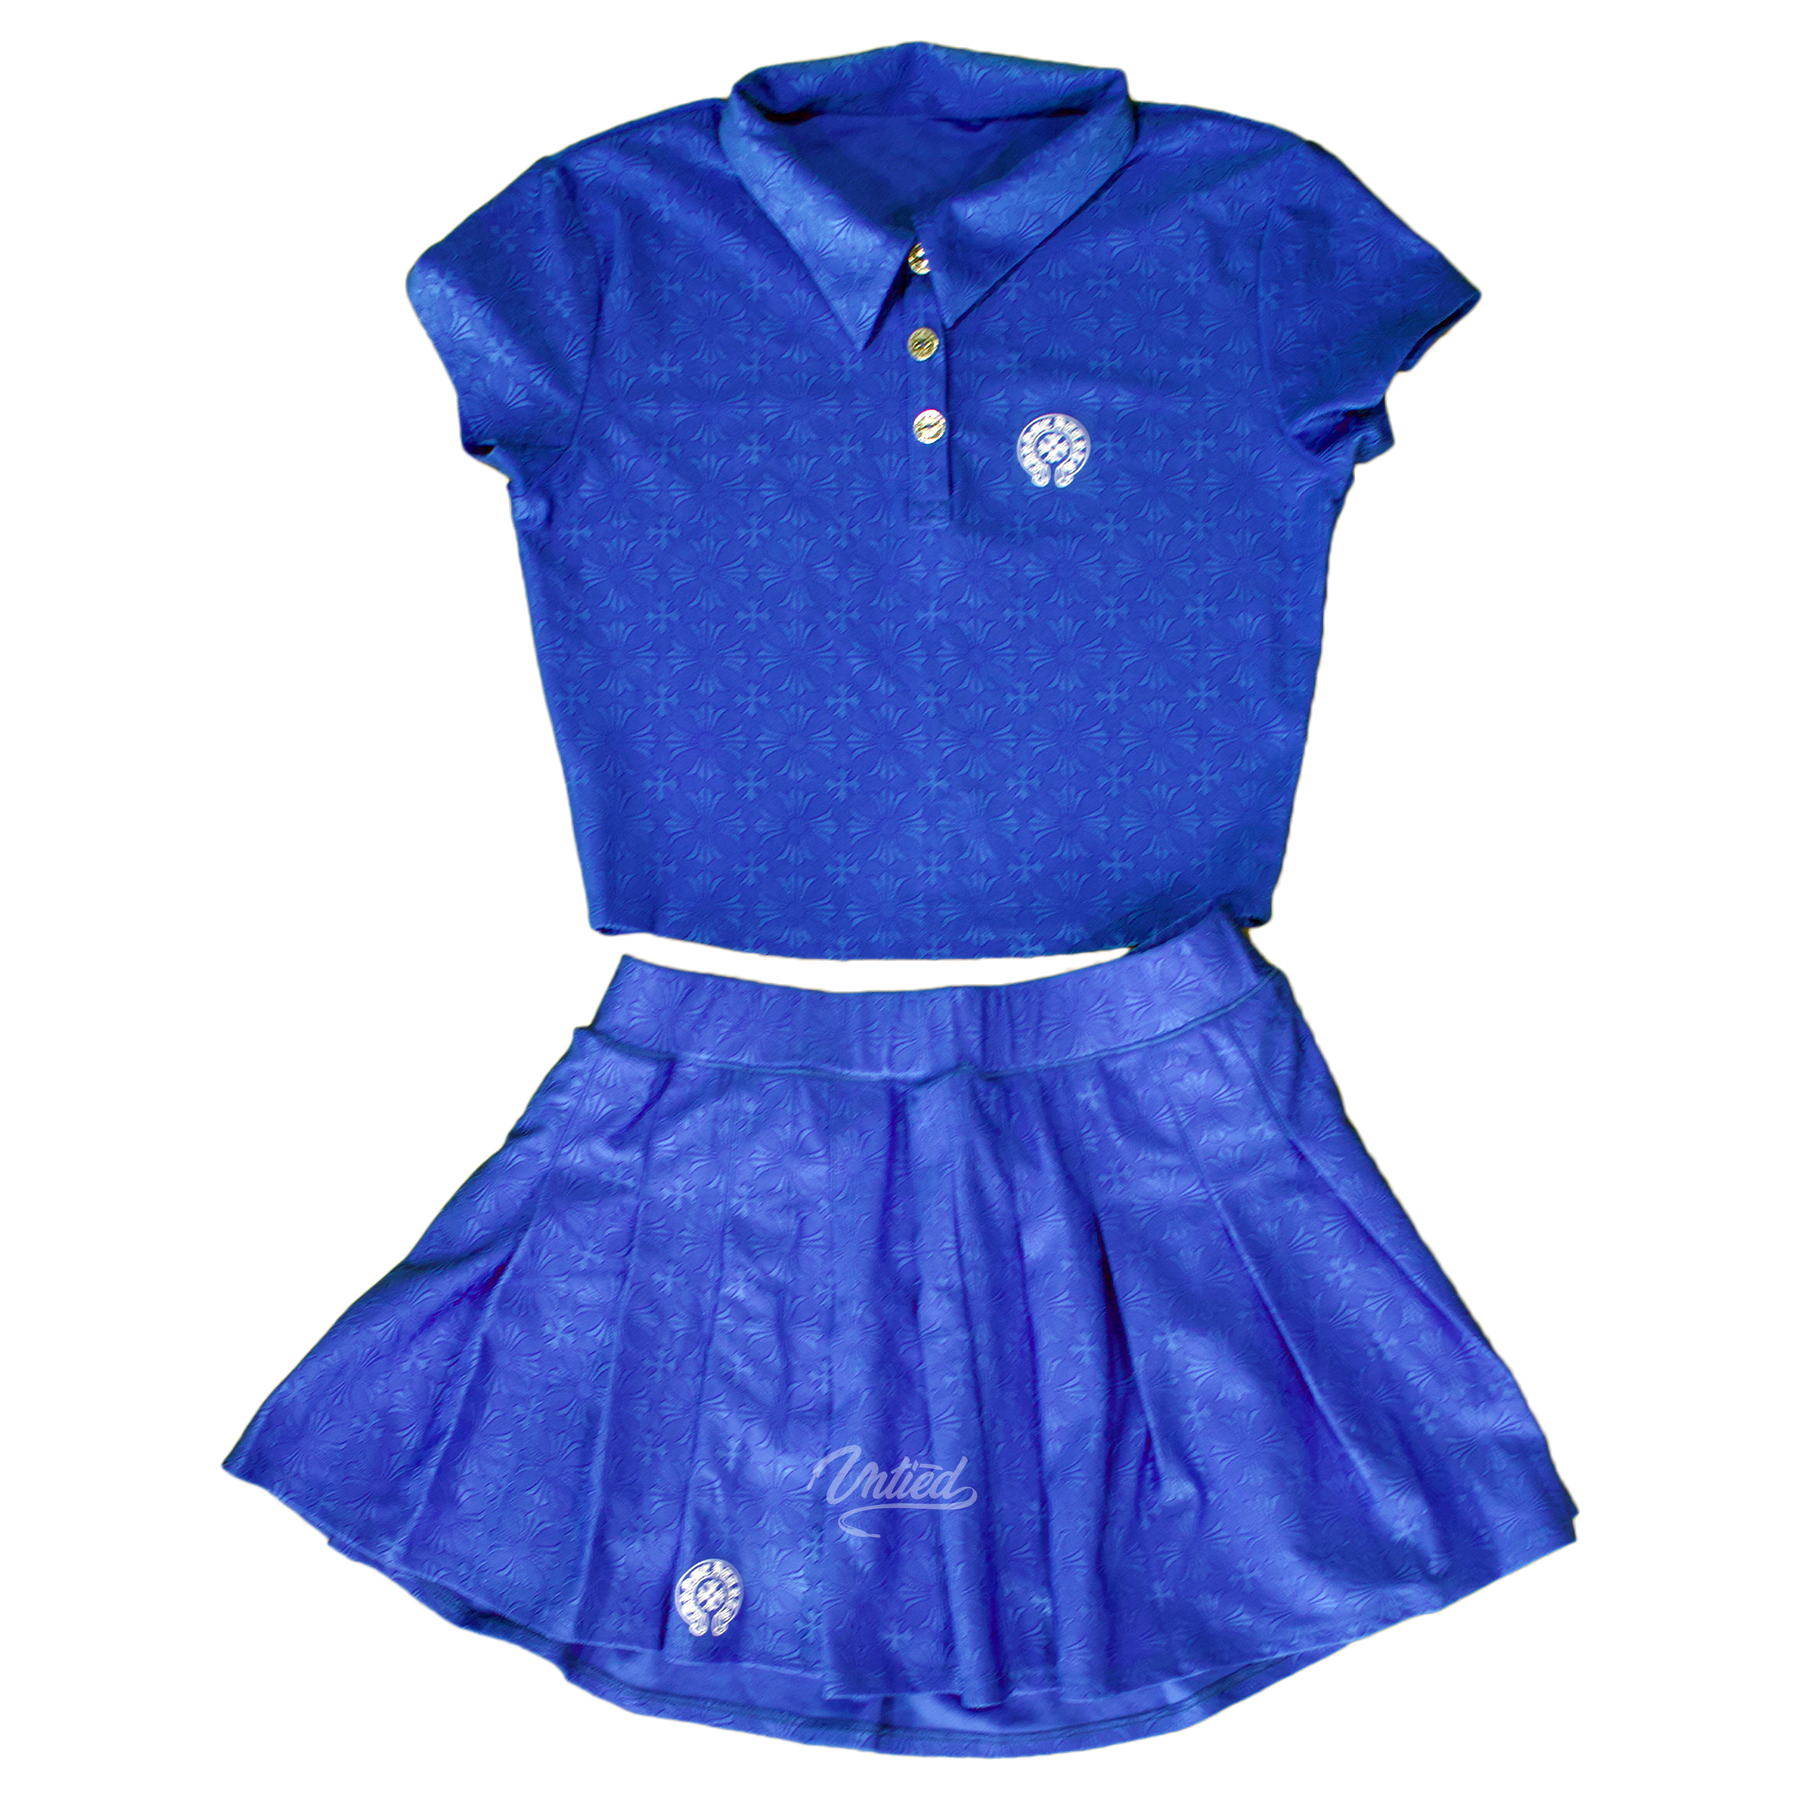 Chrome Hearts Motif Tennis Set (Polo and Skirt) "Blue"